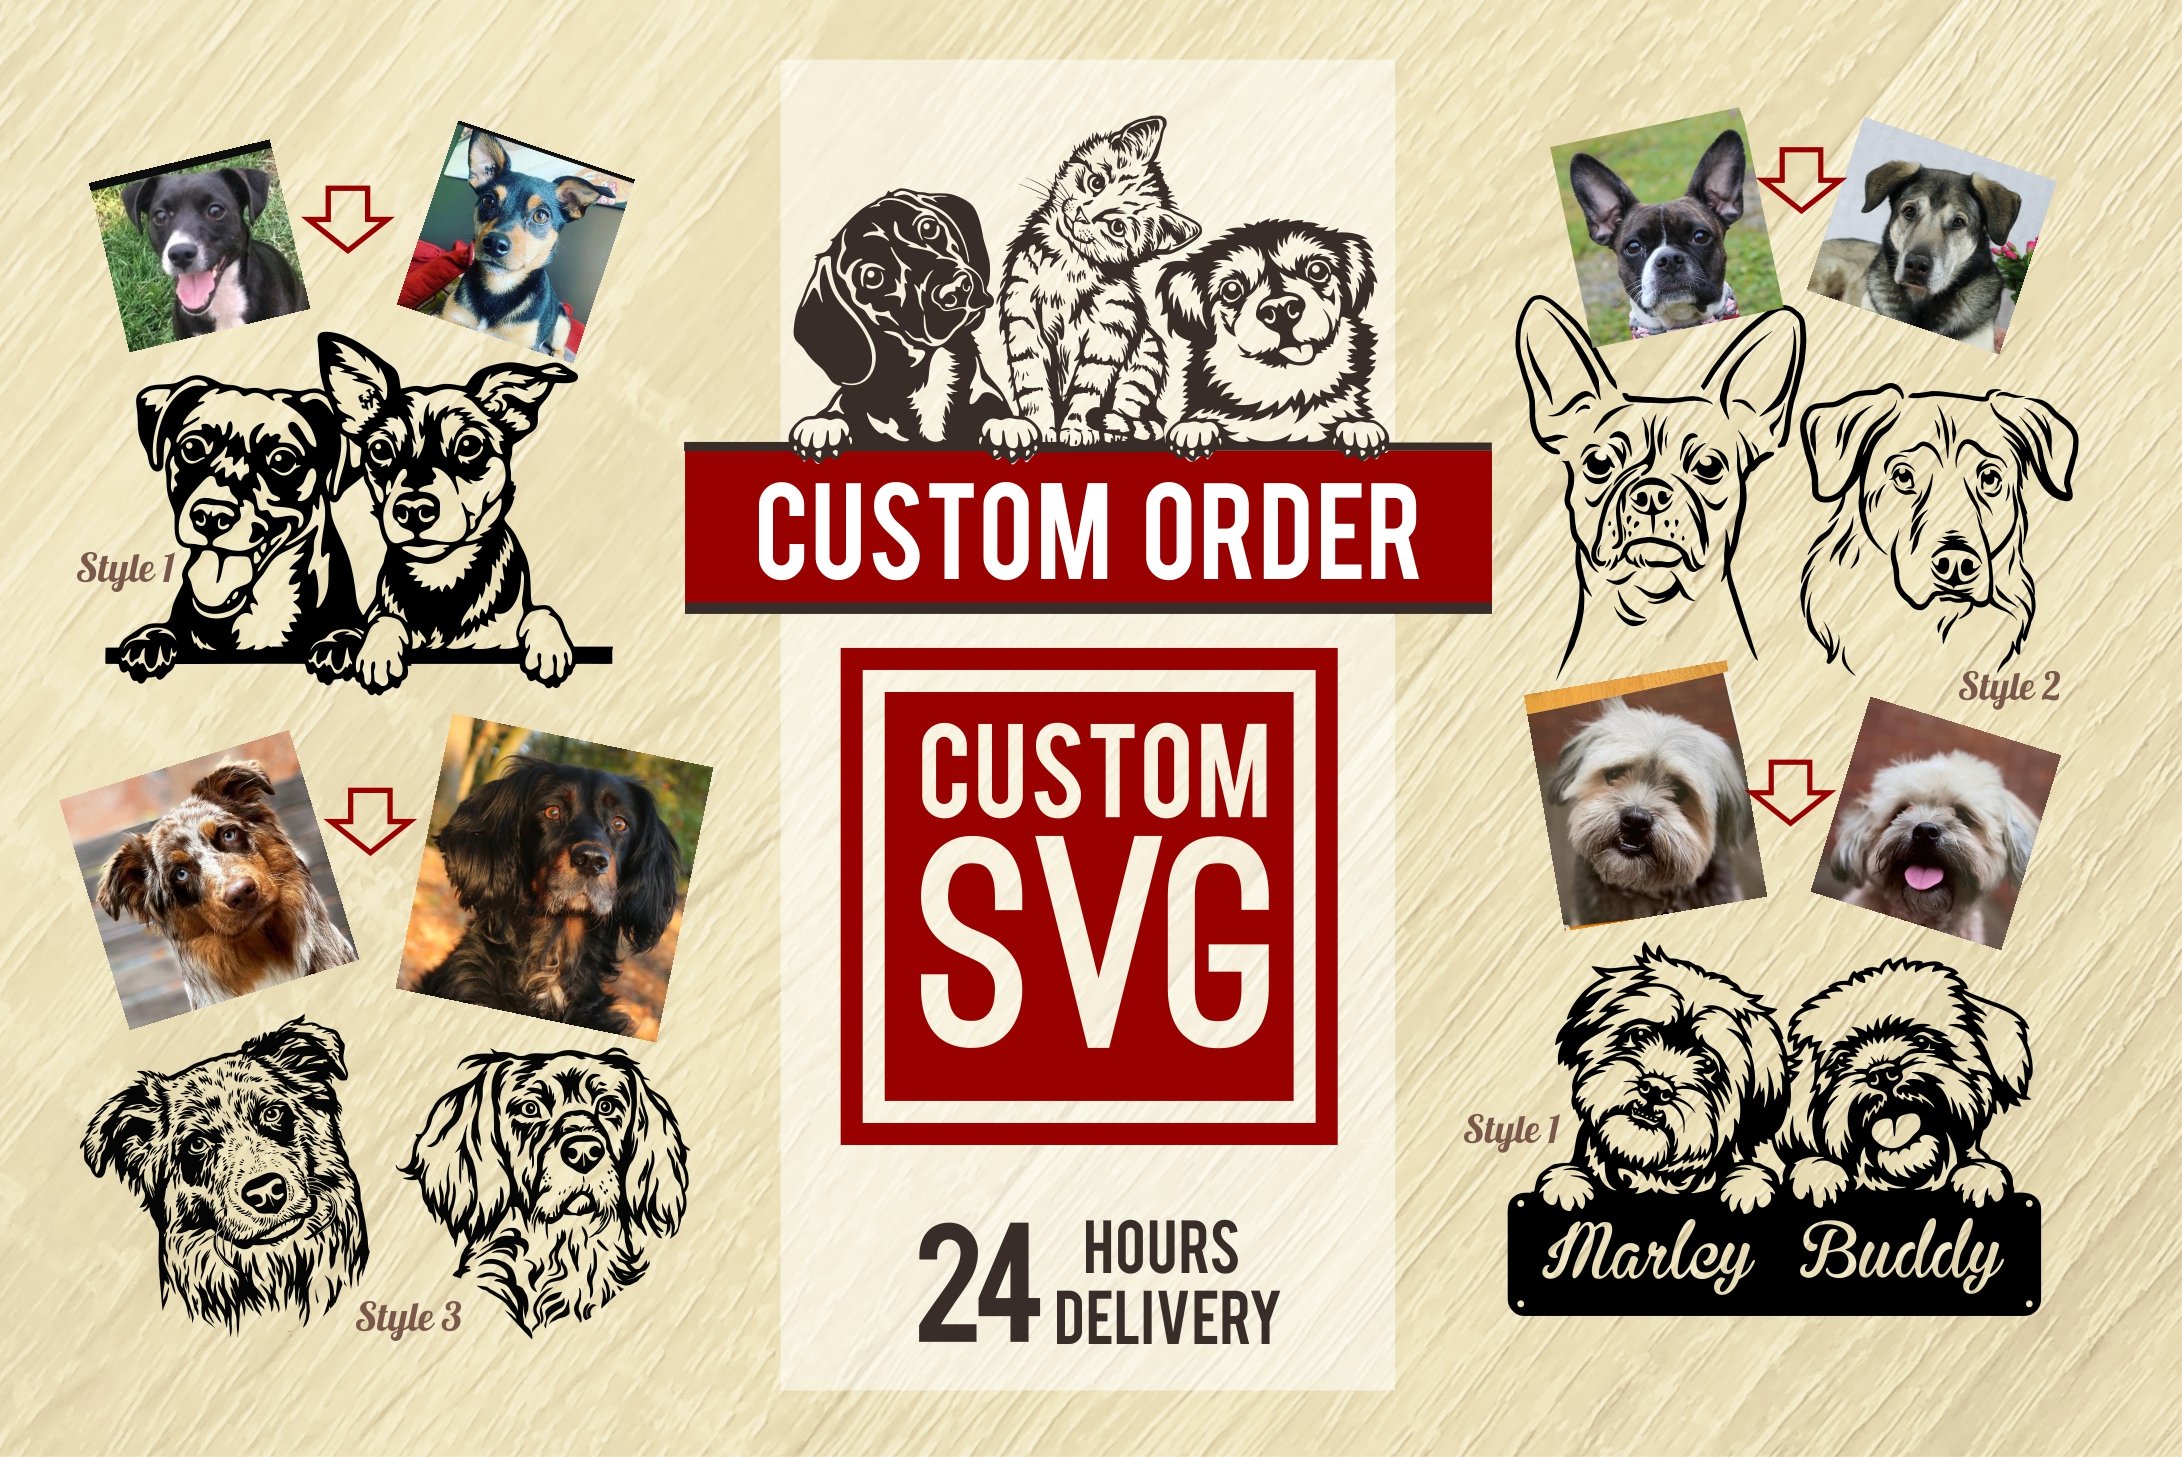 pets custom order service 281229 222